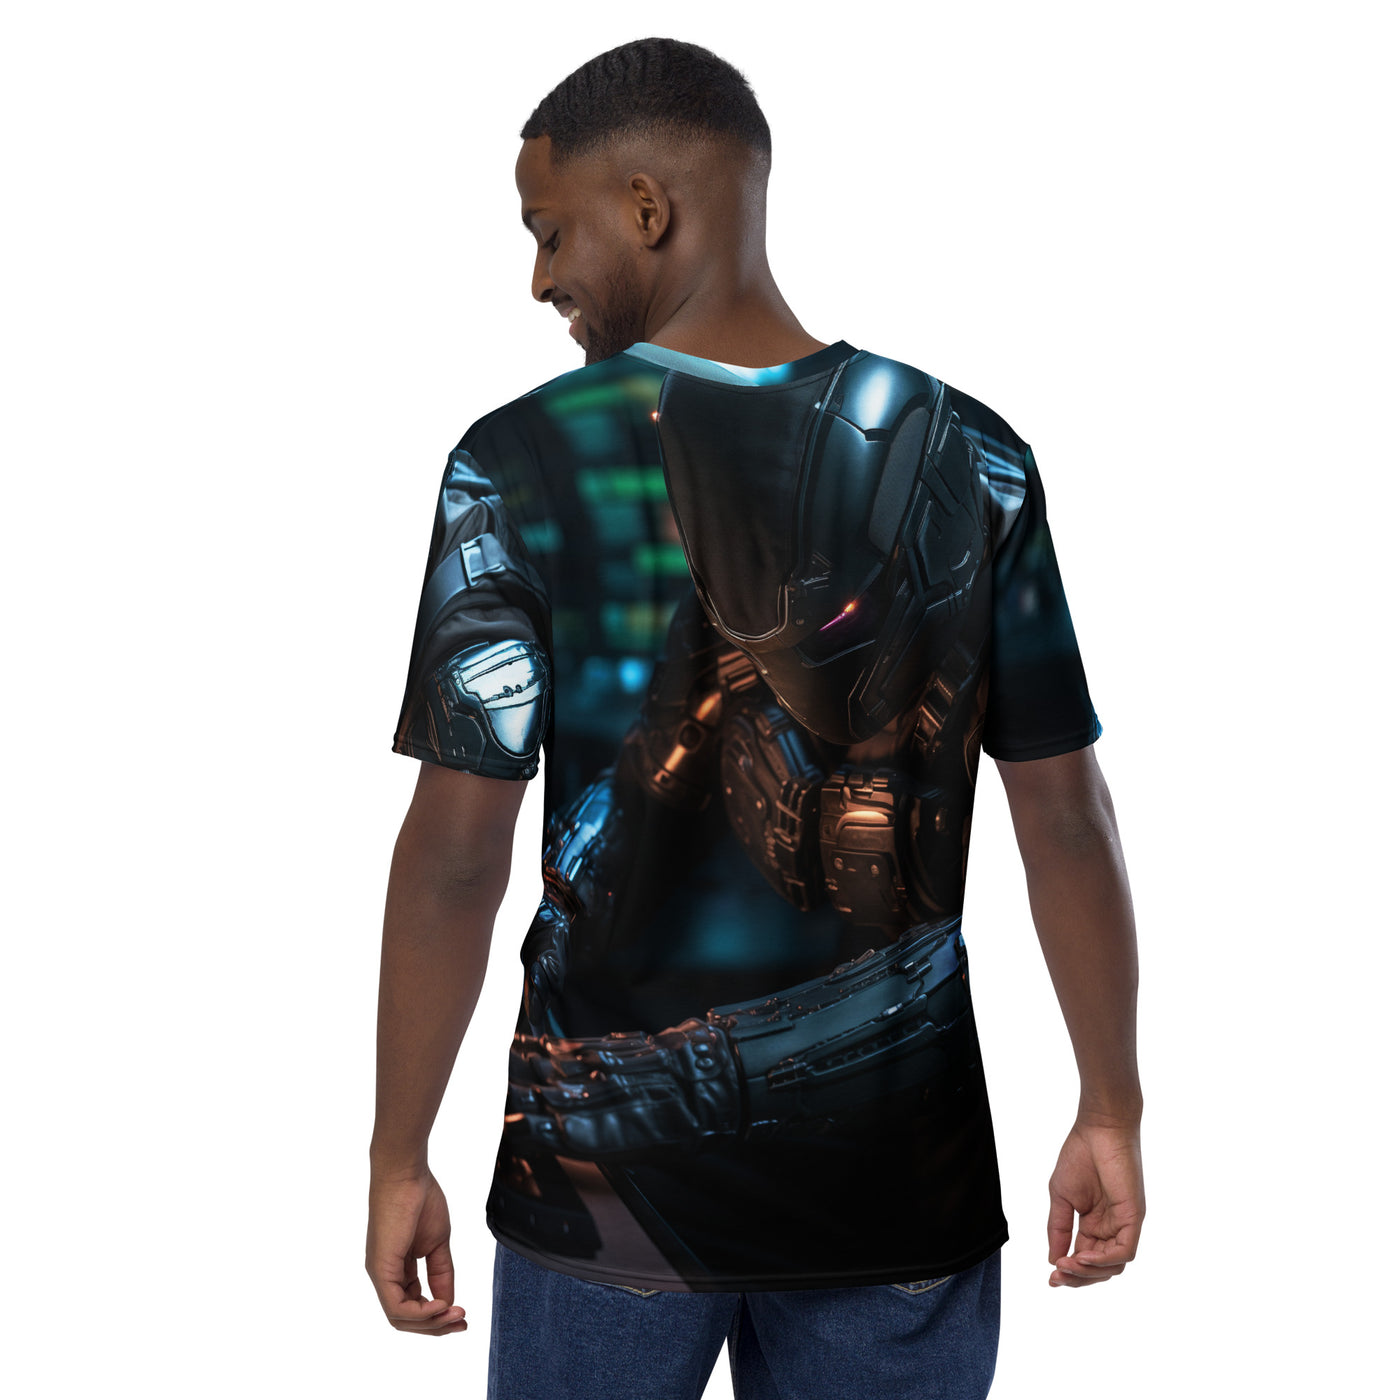 CyberArms Warrior v25 - Men's t-shirt